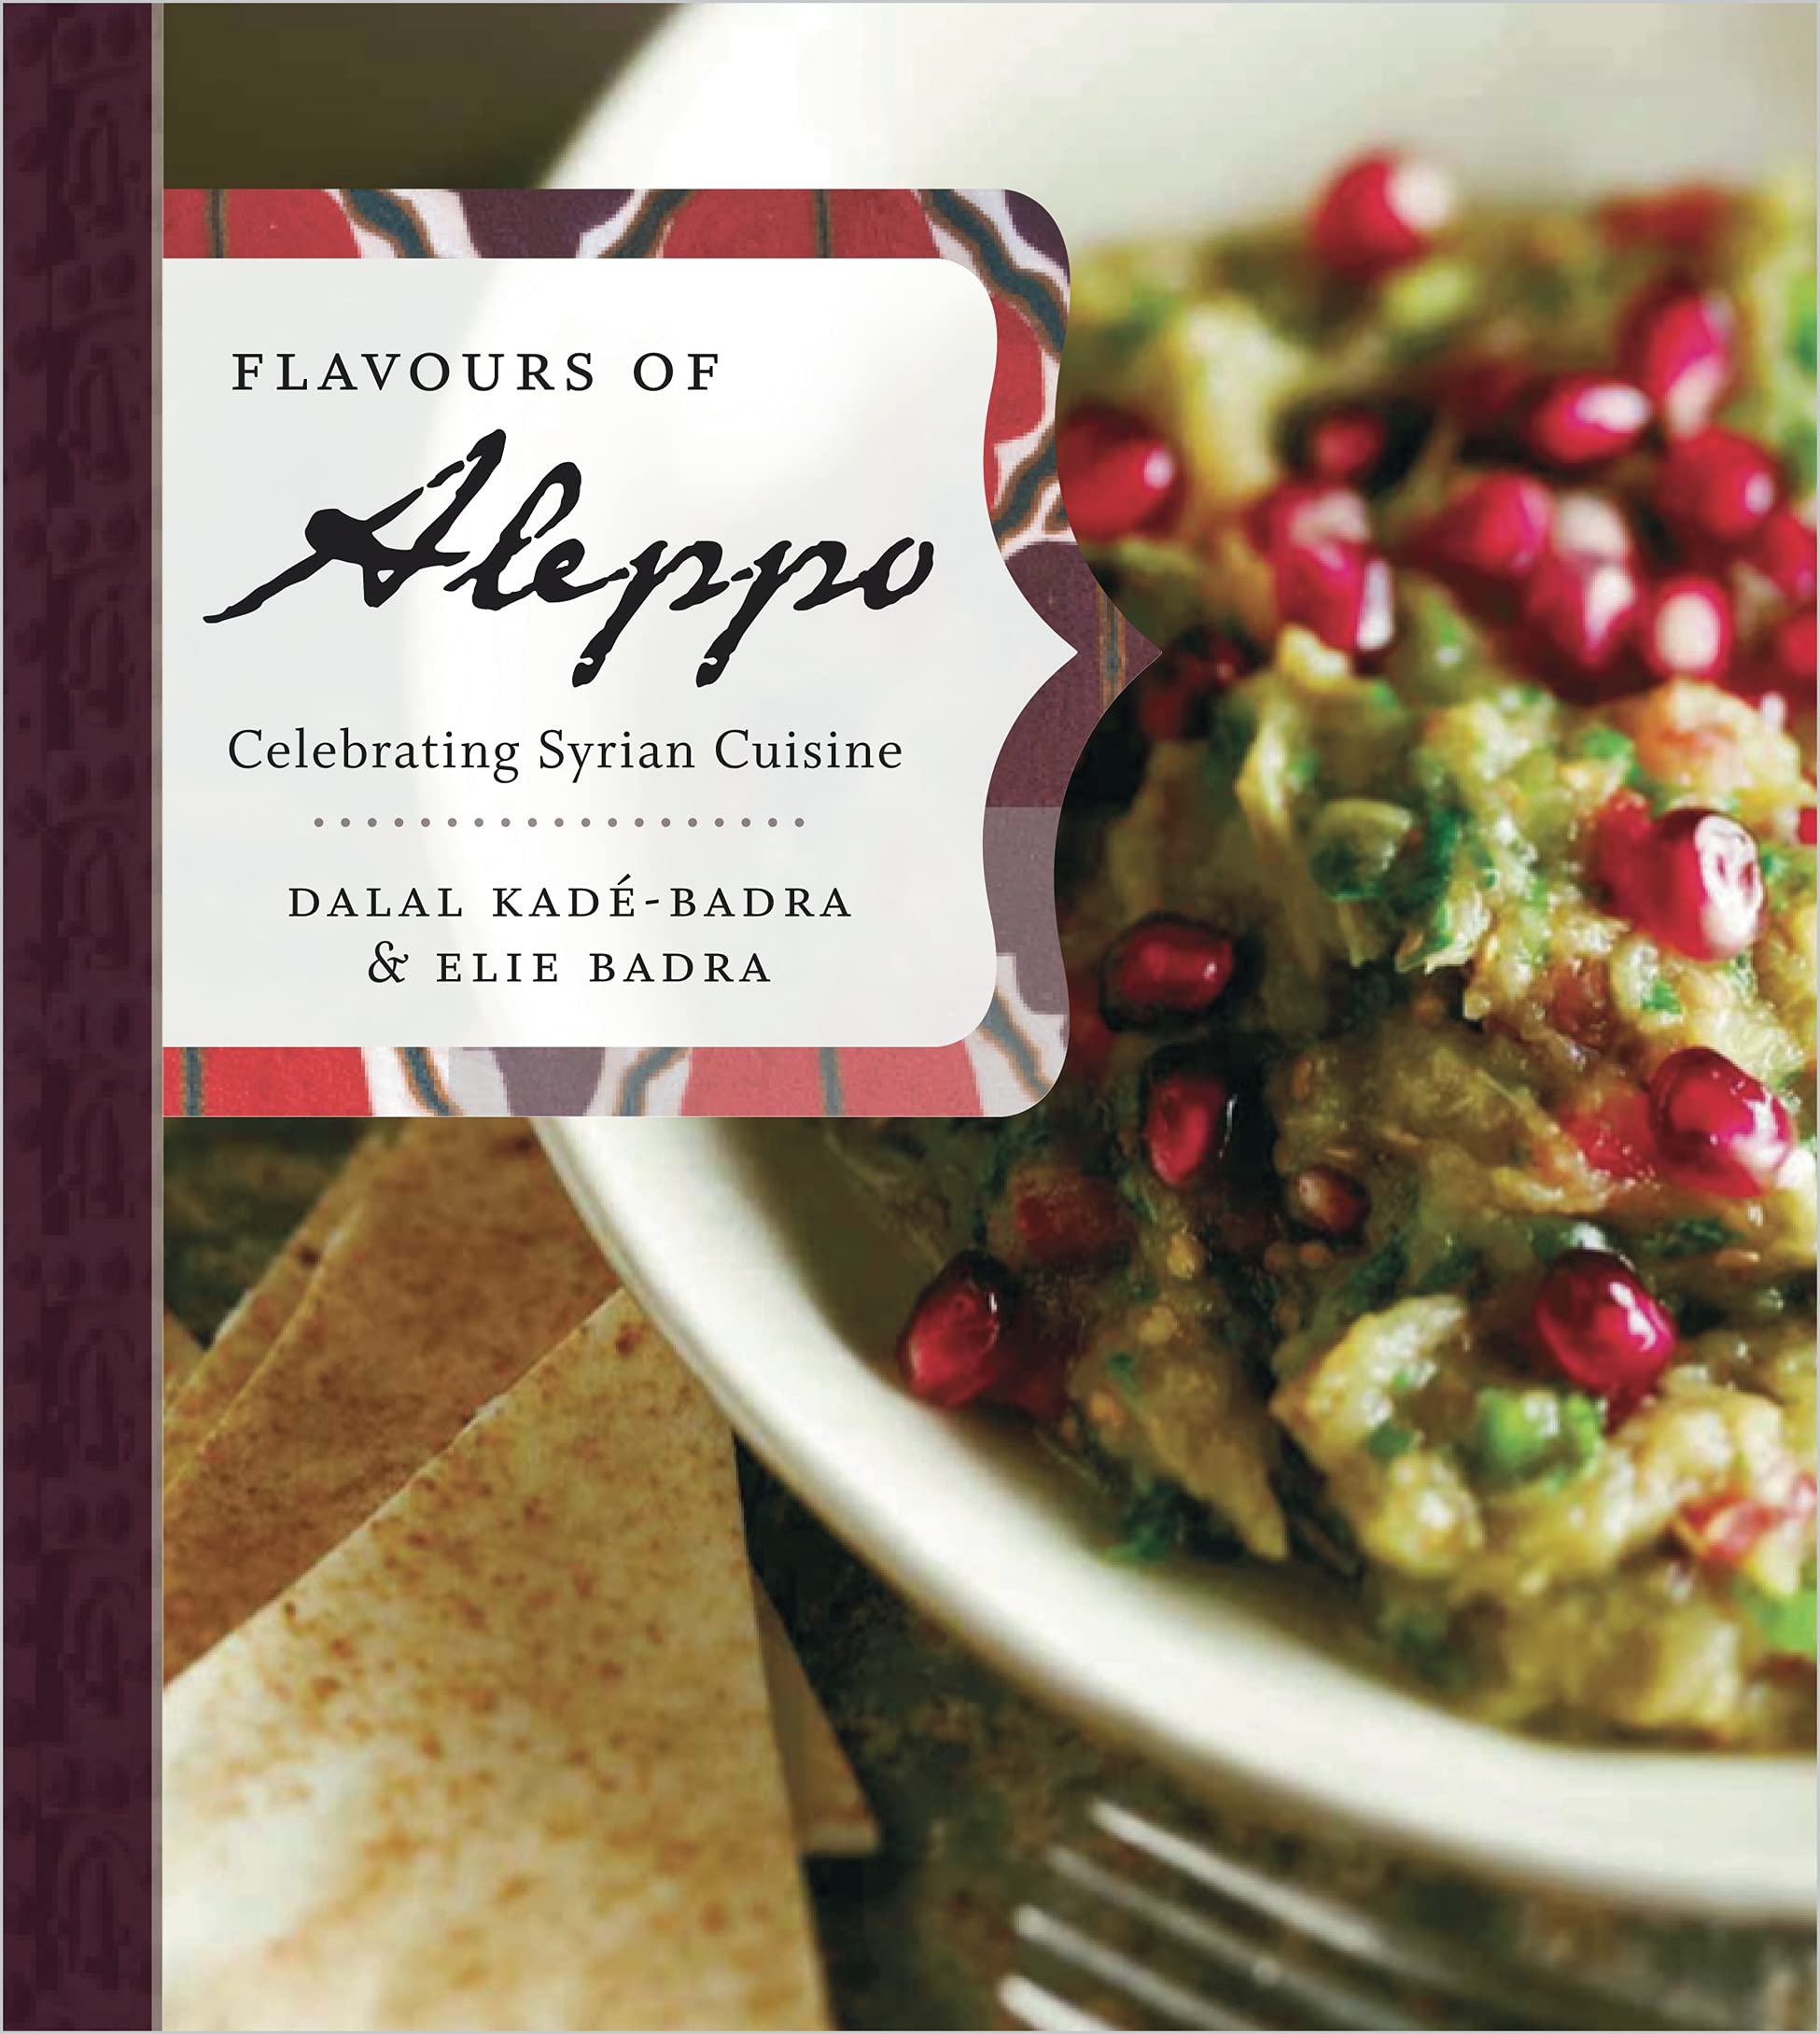 Flavours of Aleppo: Celebrating Syrian Cuisine (Dalal Kade-Badra, Elie Badra)